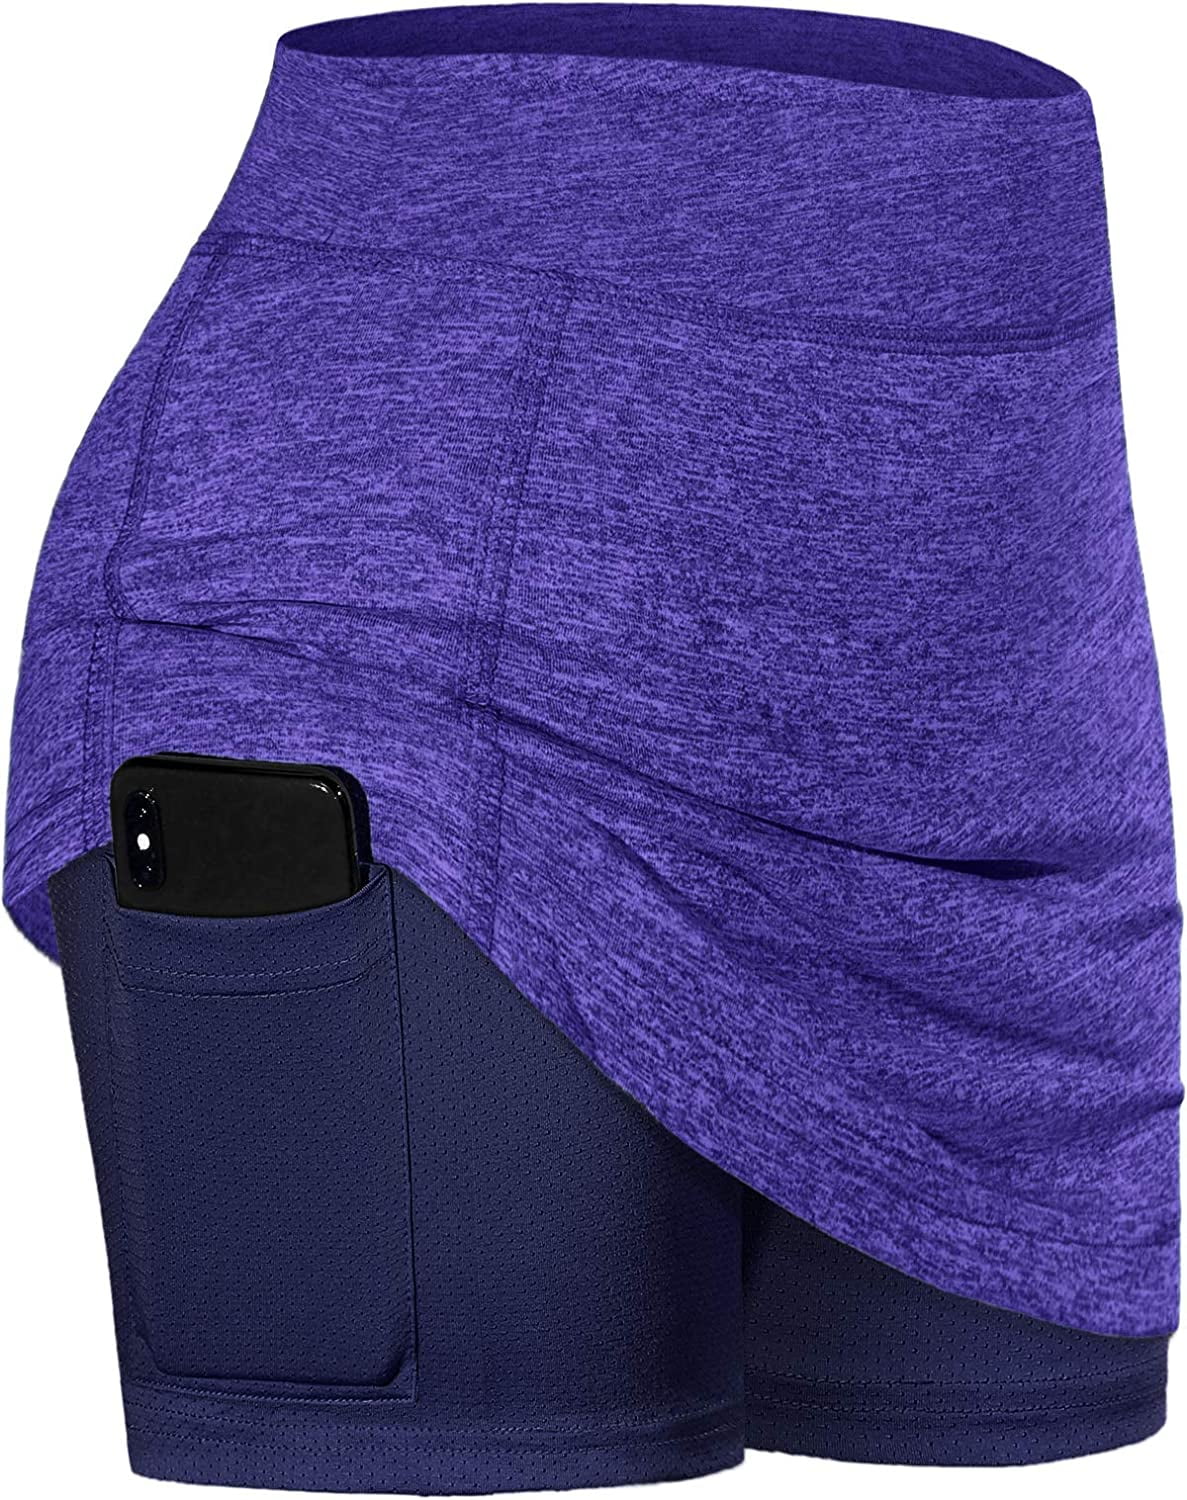 UNPIIN Skorts Skirts for Women High Waist Yoga Shorts Summer Casual Tennis Skirt Elastic Tummy Control Shorts 